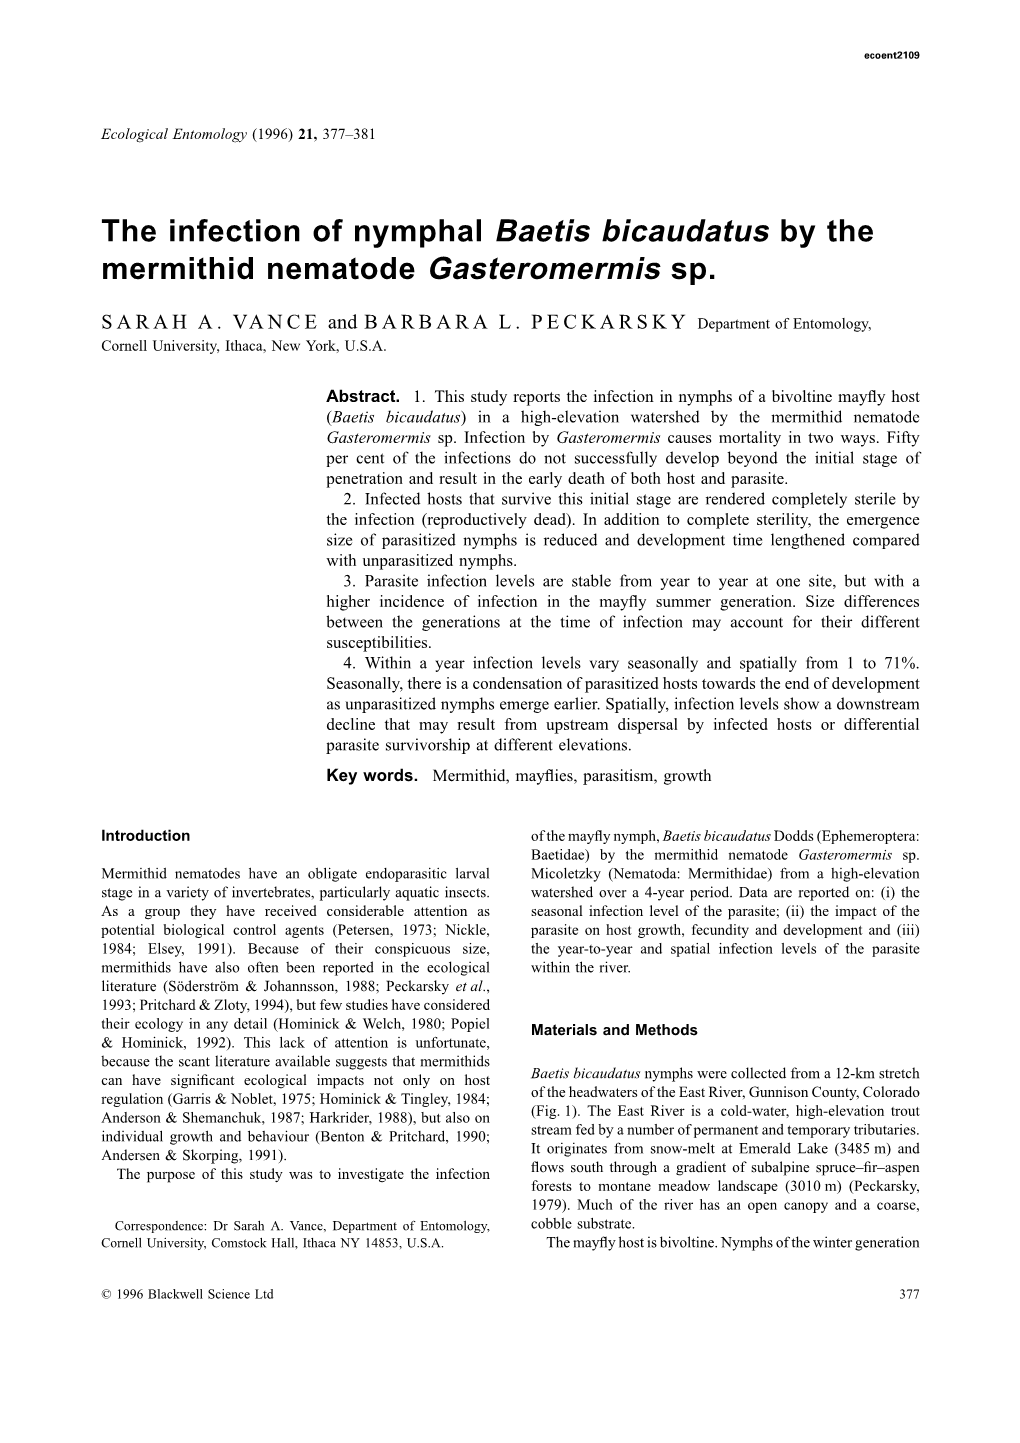 The Infection of Nymphal Baetis Bicaudatus by the Mermithid Nematode Gasteromermis Sp